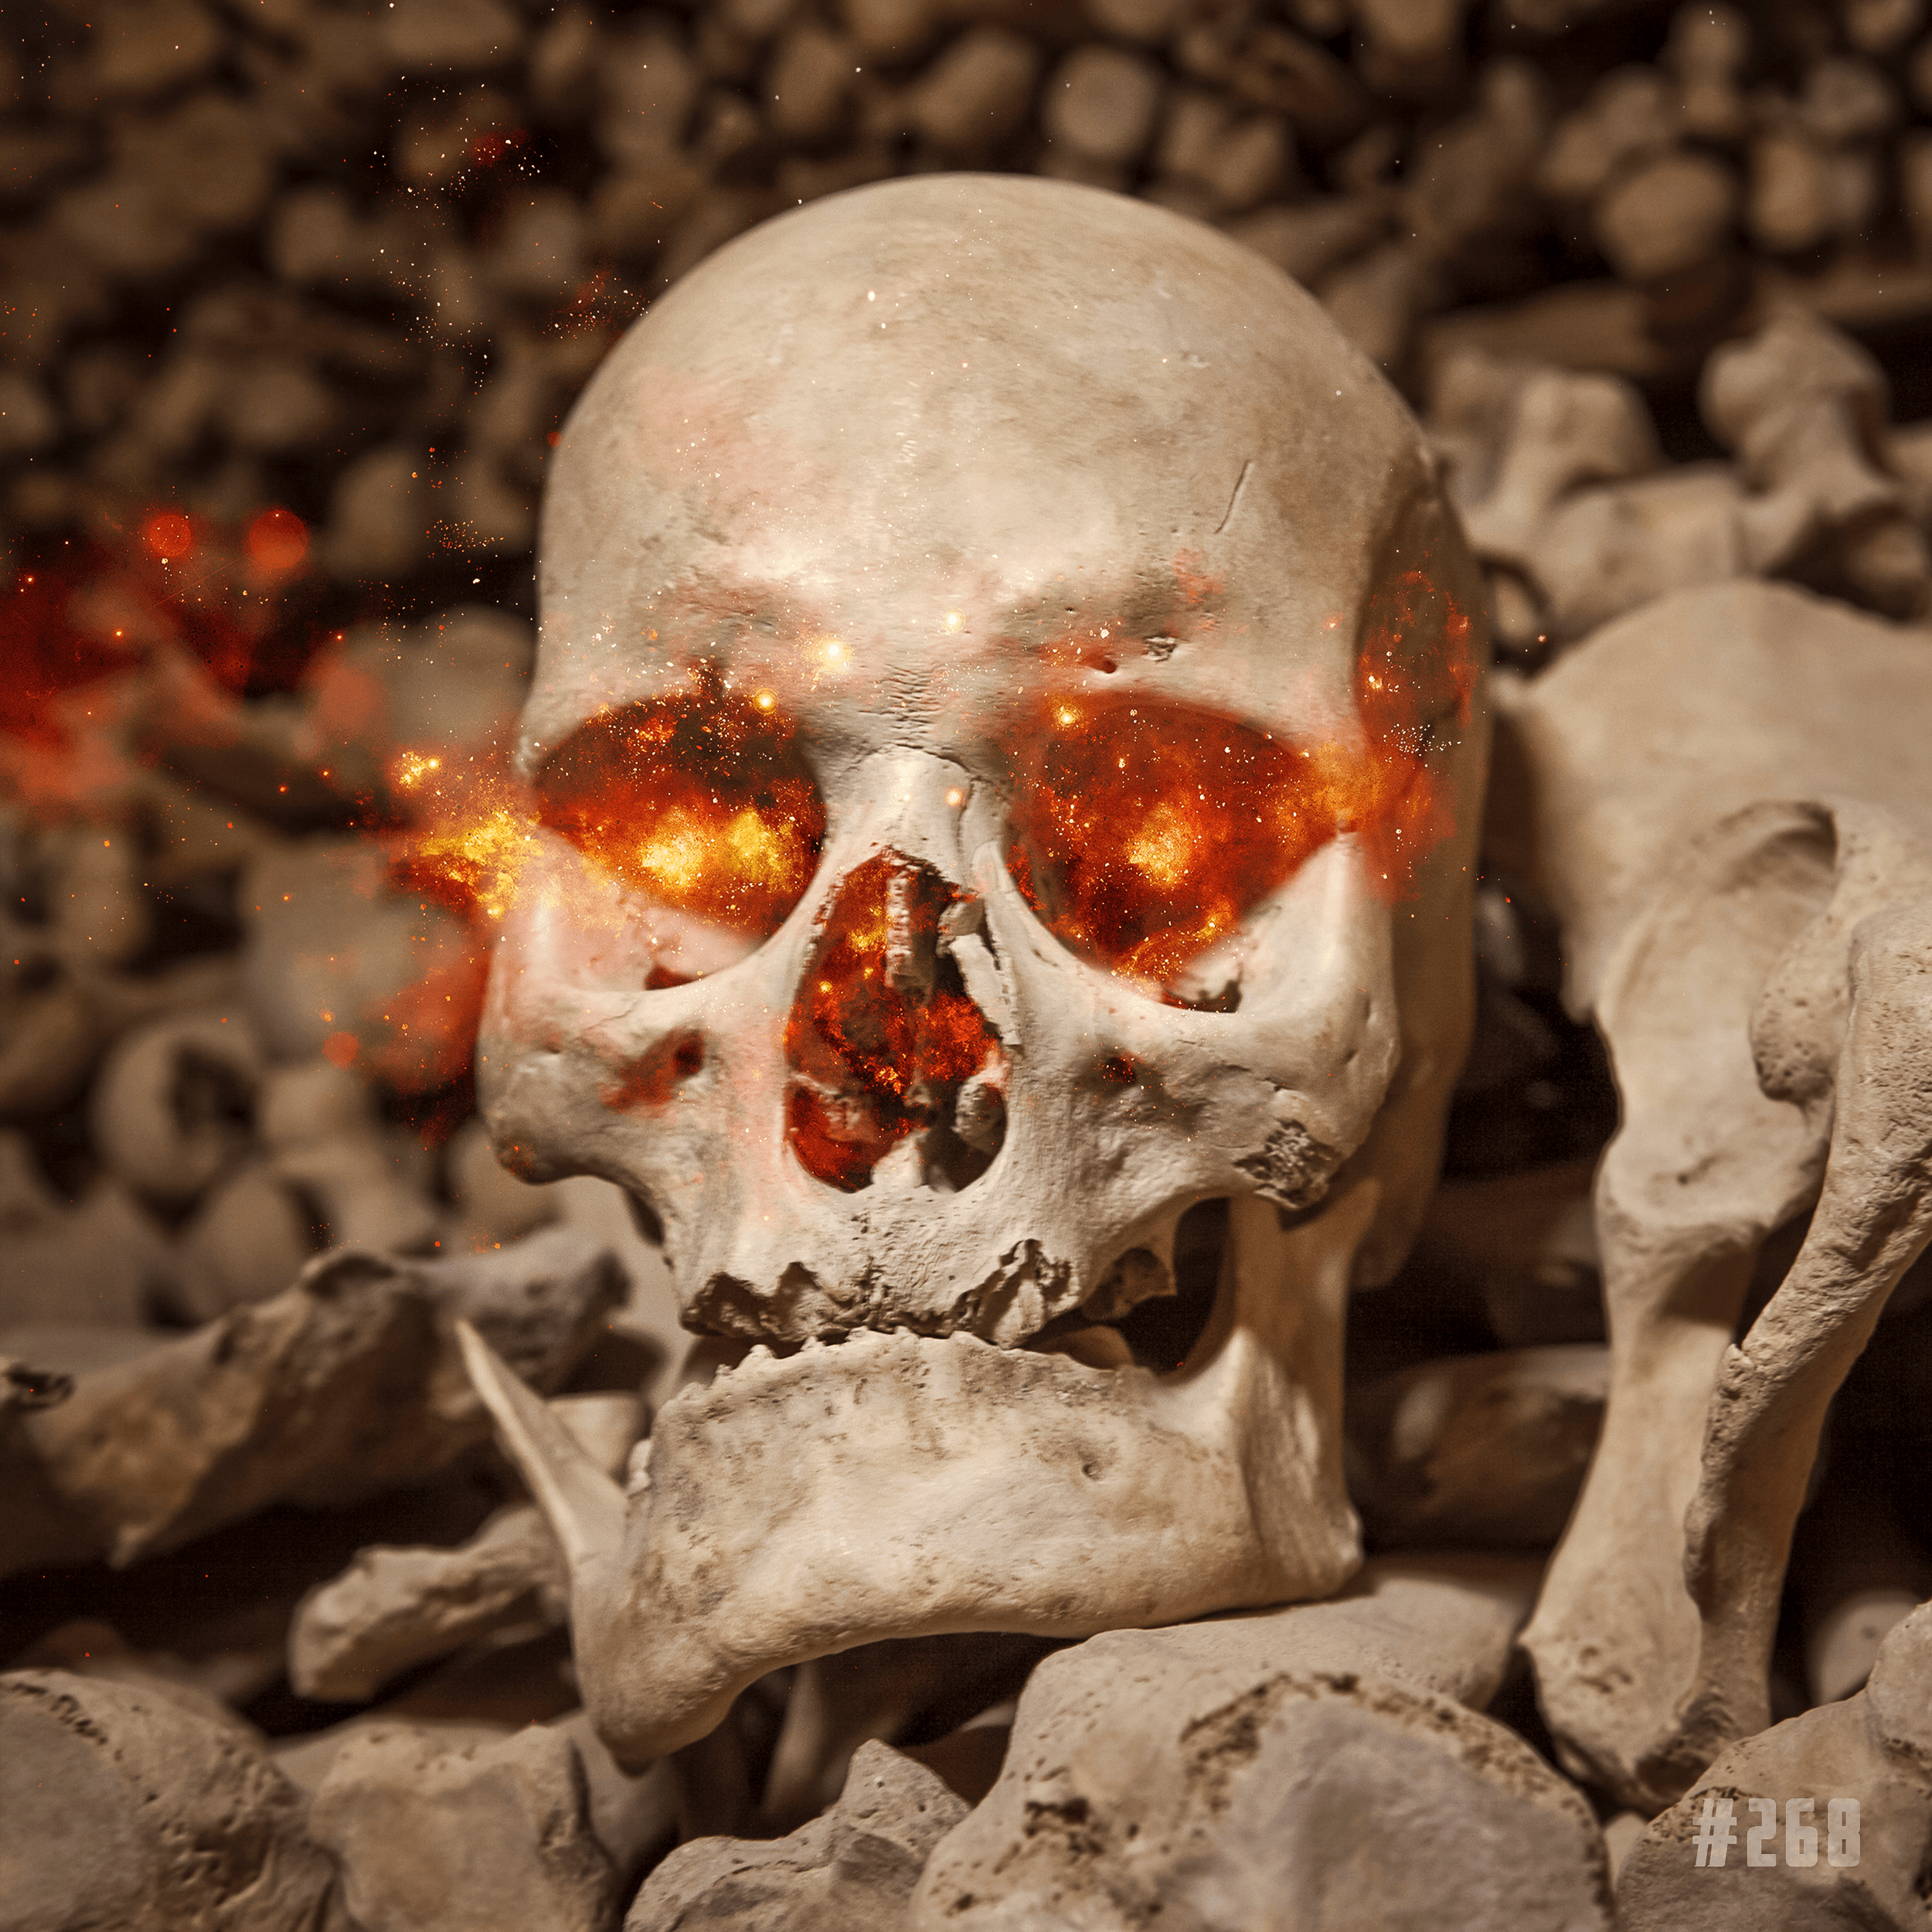 Skulls On ETH #268